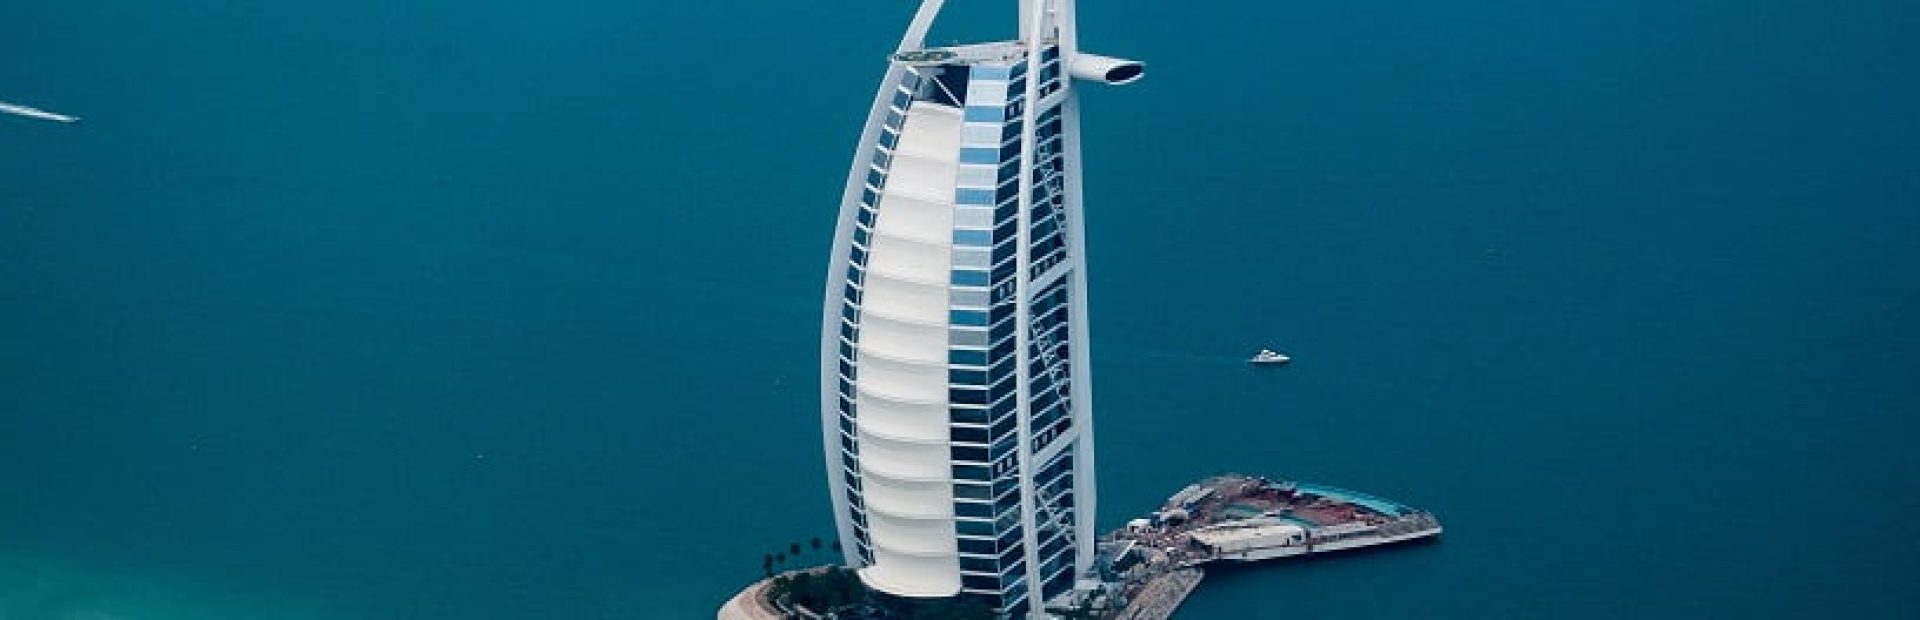 Burj al Arab Dubai Glimpses of the World